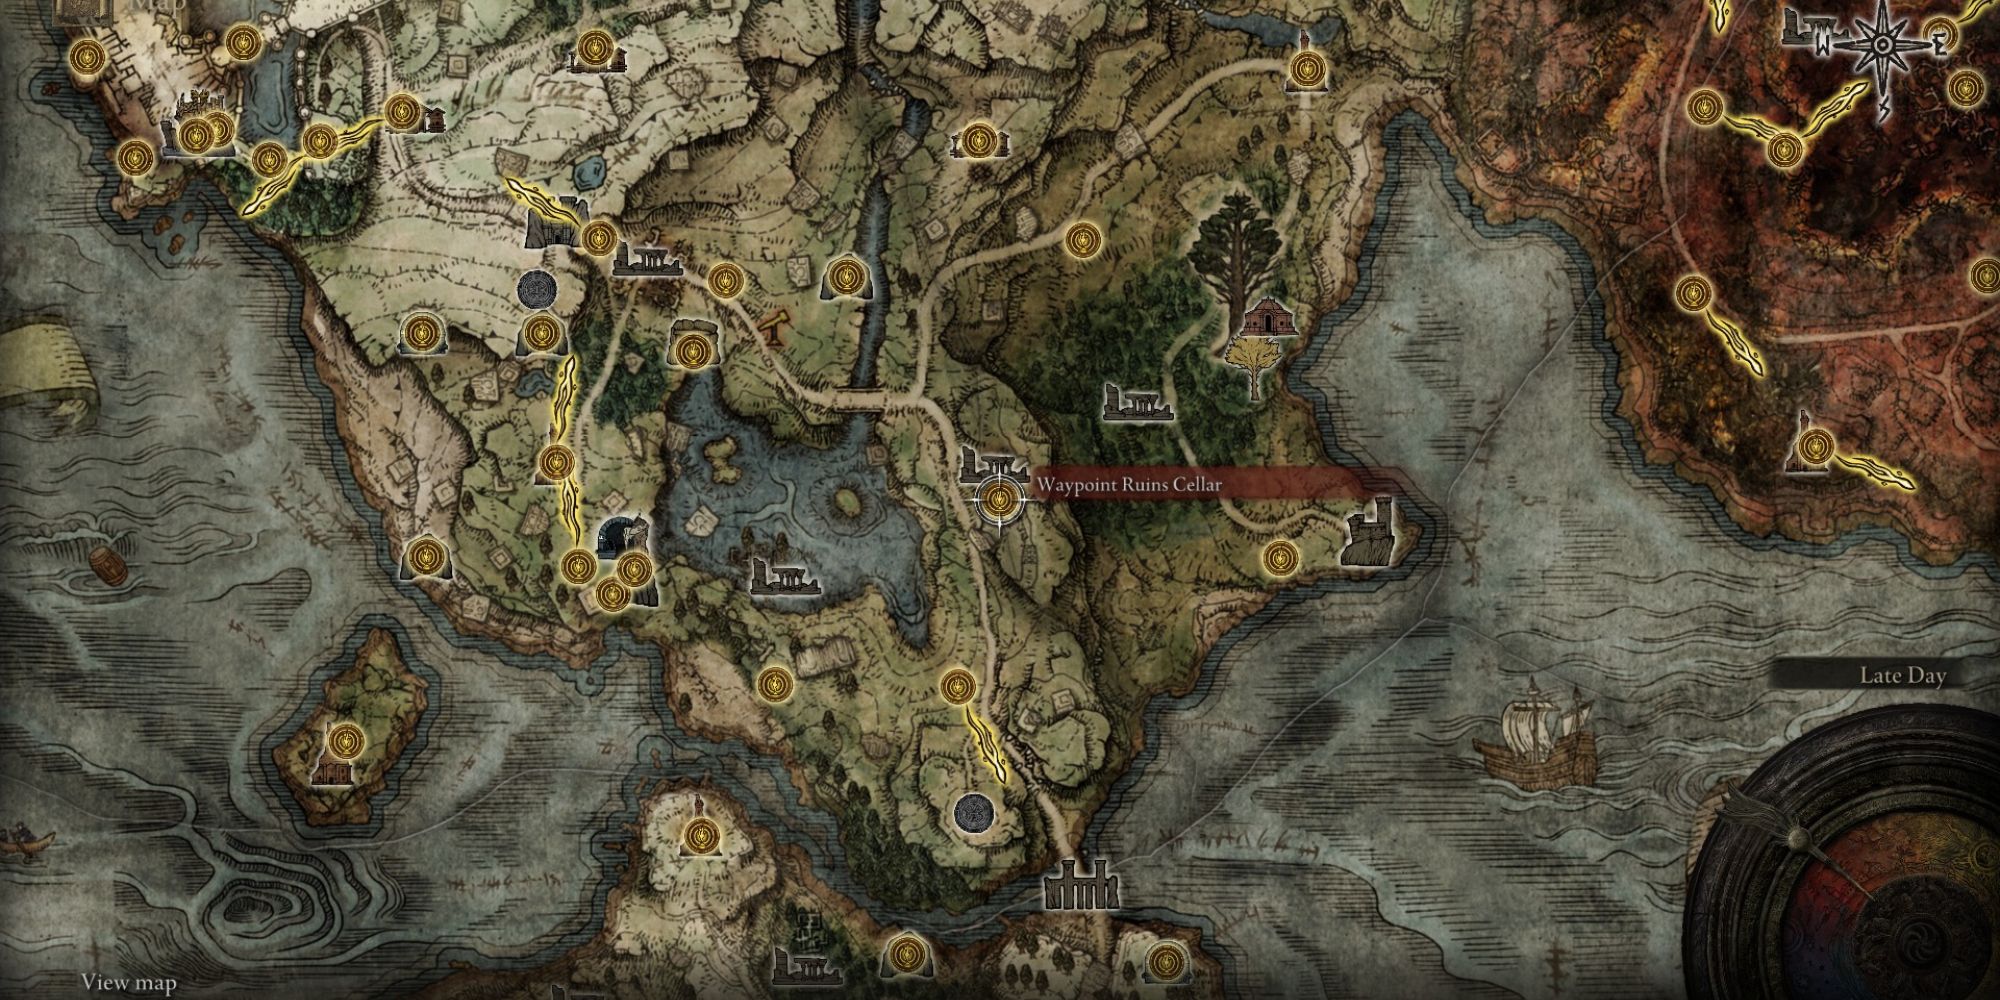 Elden Ring waypoint ruins cellar on map